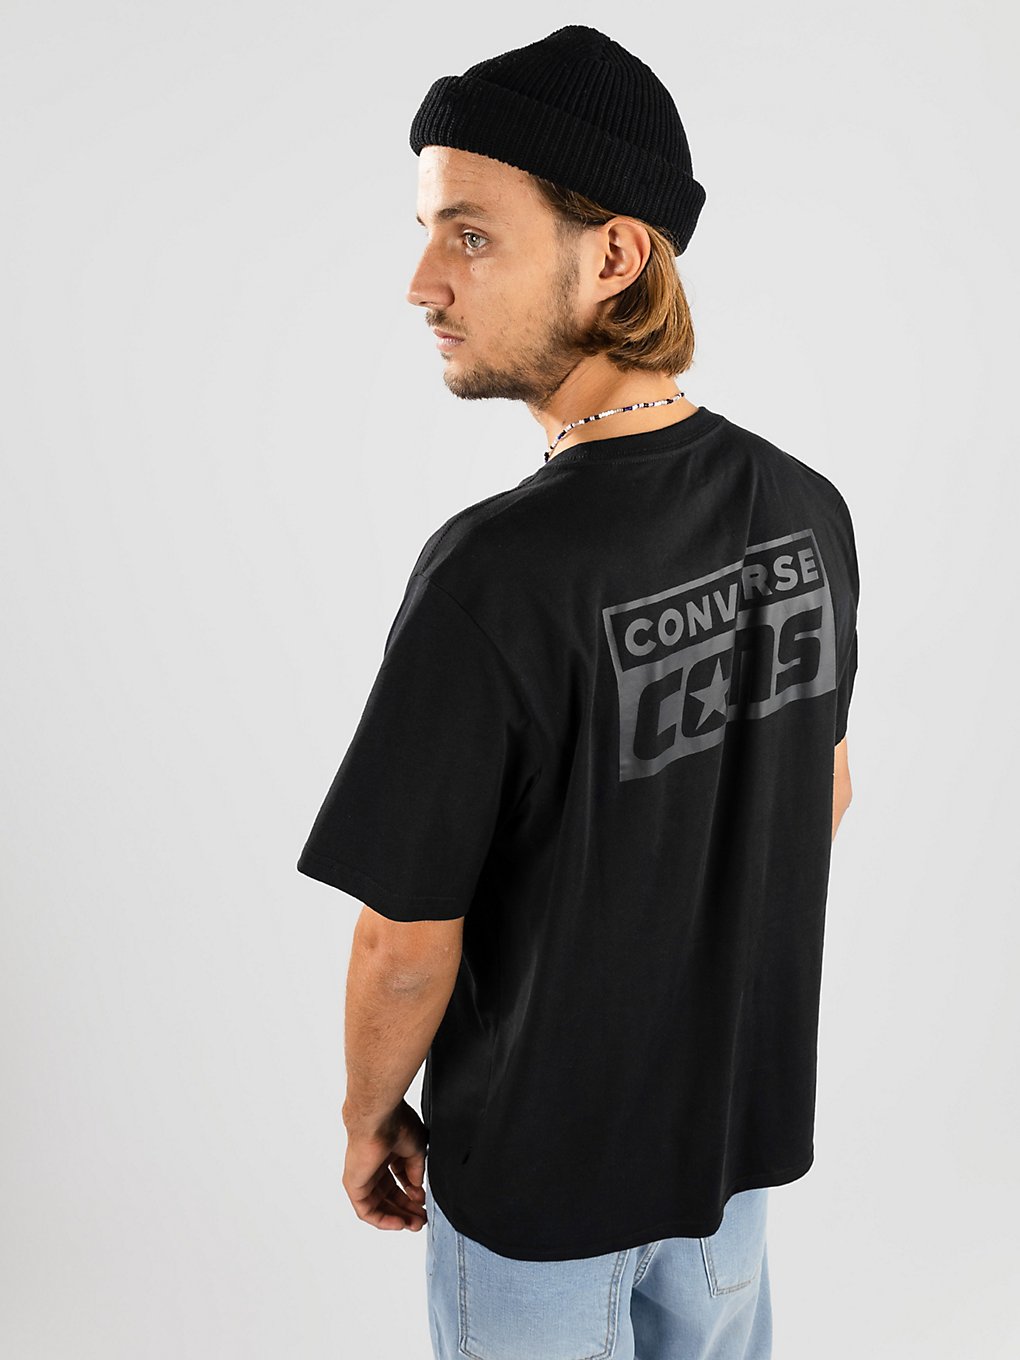 converse cons t-shirt black